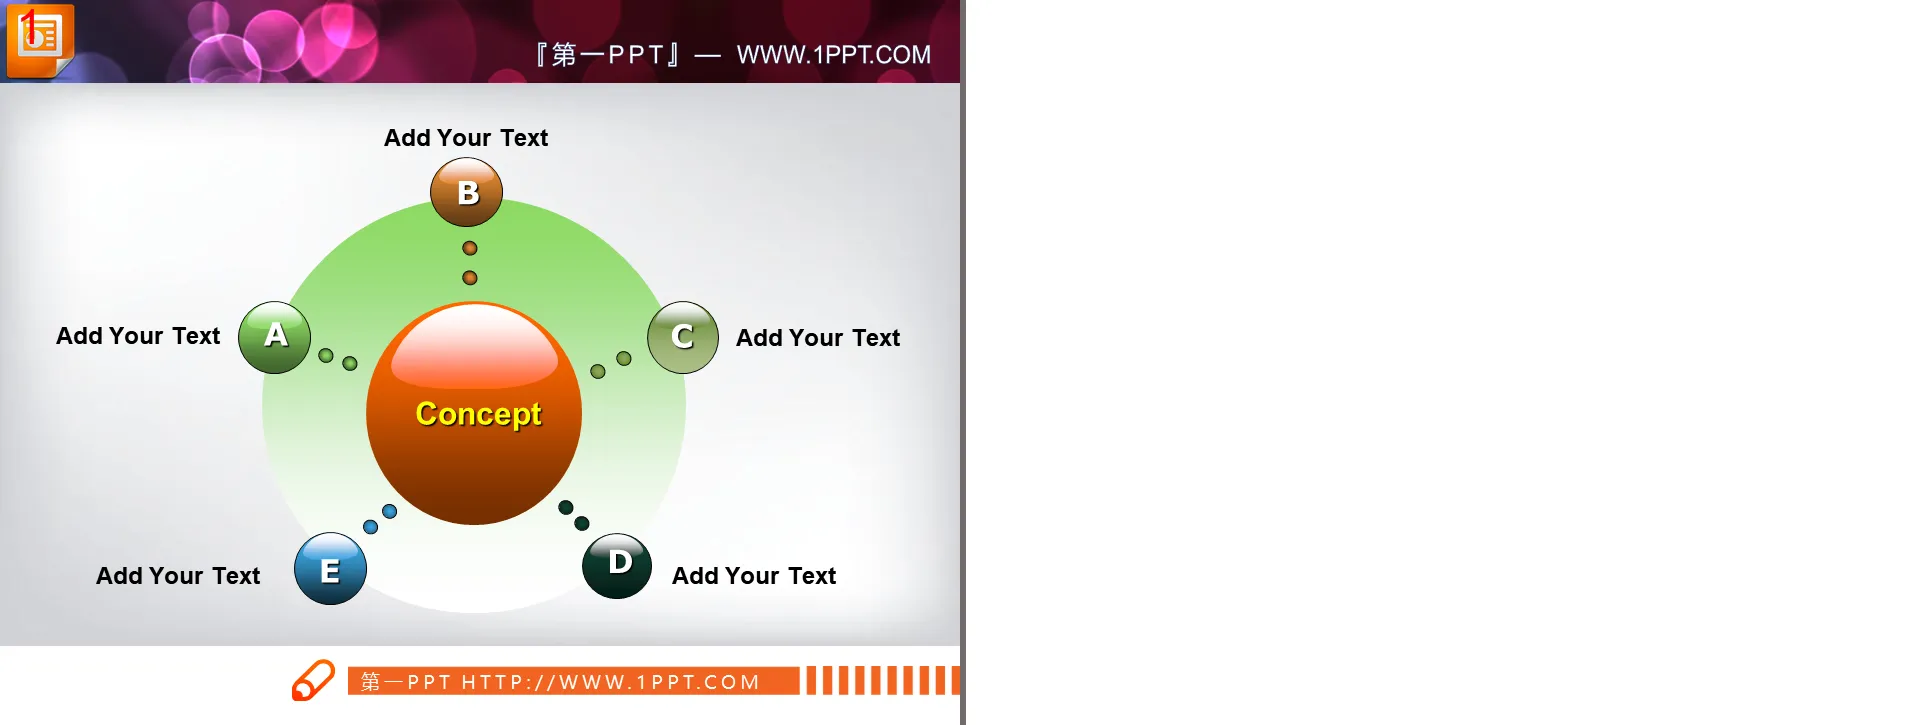 Pentagon PPT relationship diagram